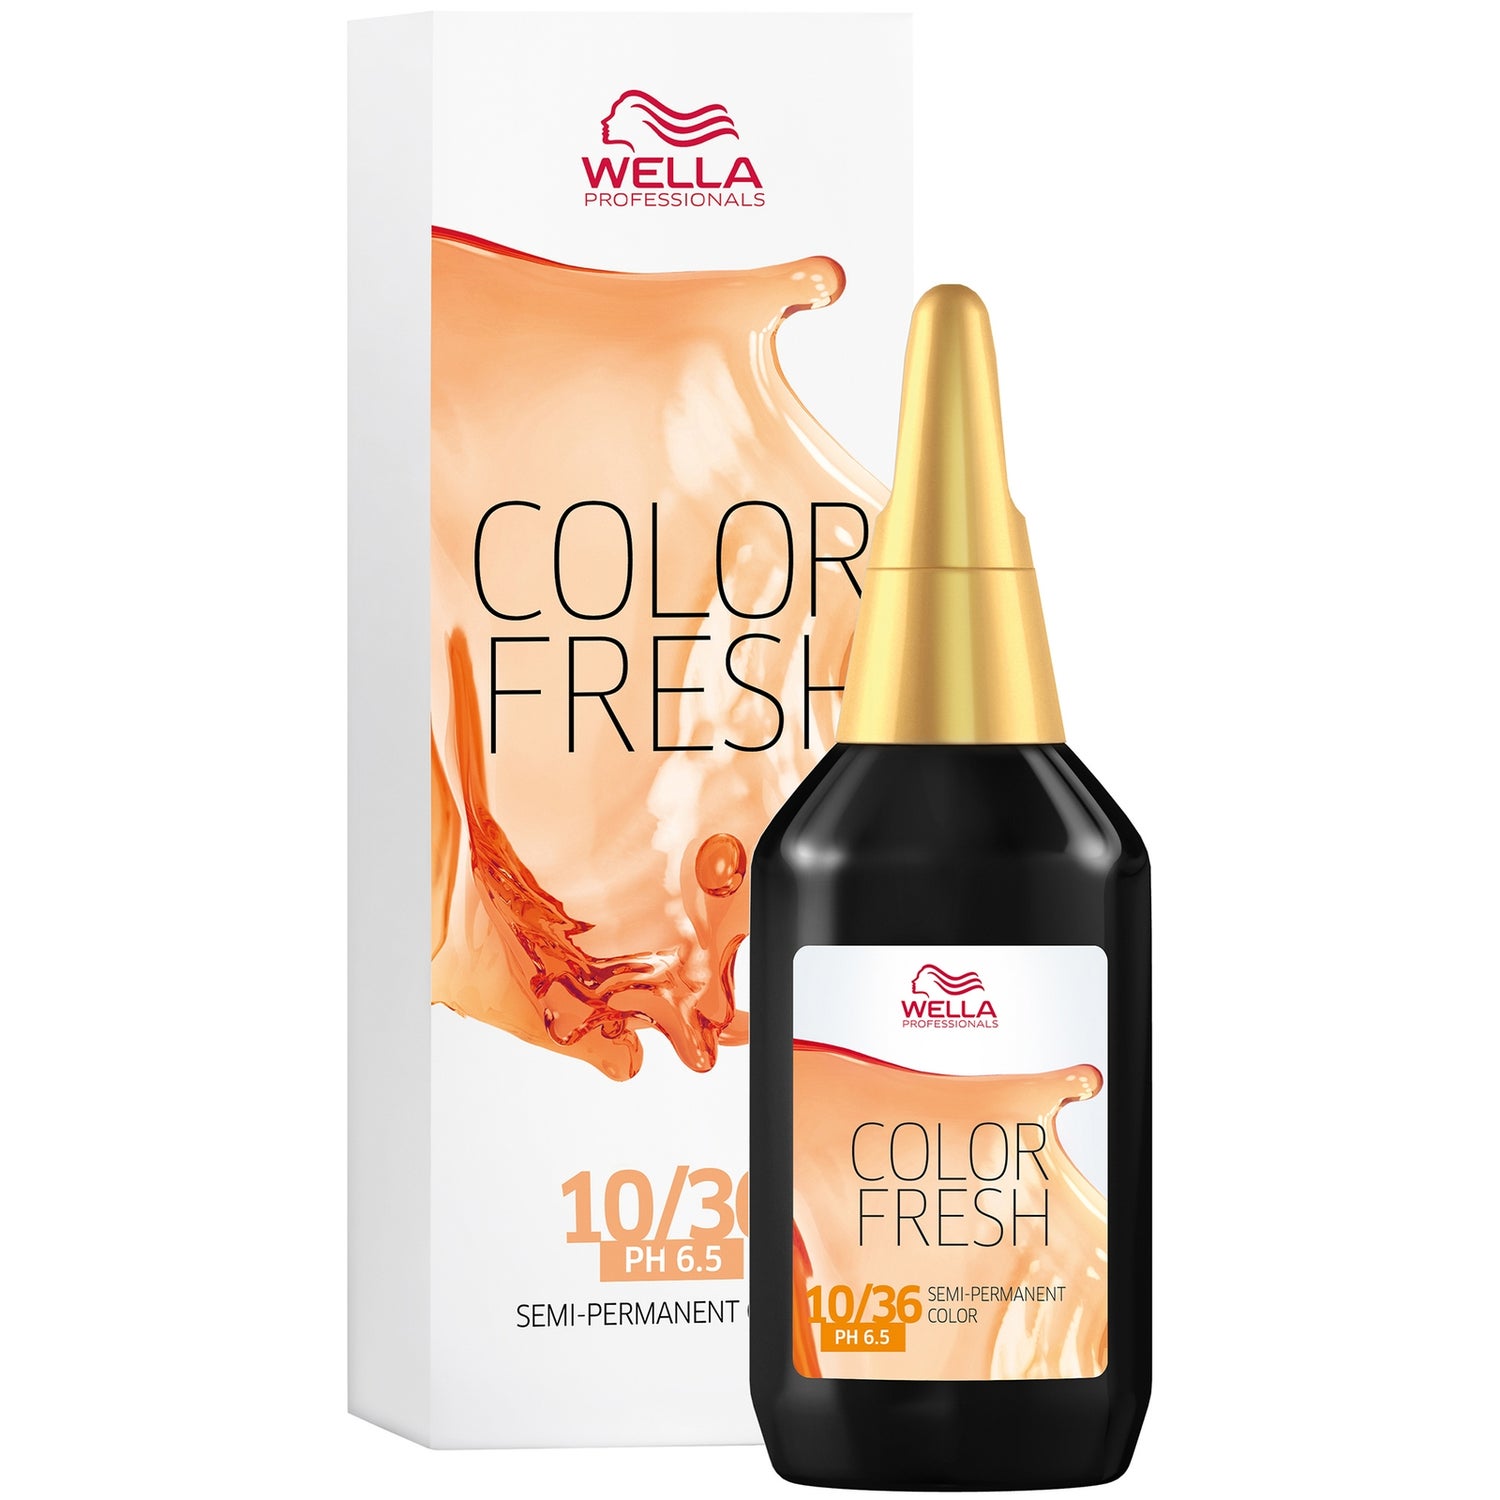 Wella Professionals Color Fresh Semi-Permanent Color - 10/36 Lightest Blonde Gold Violet 2.5 oz